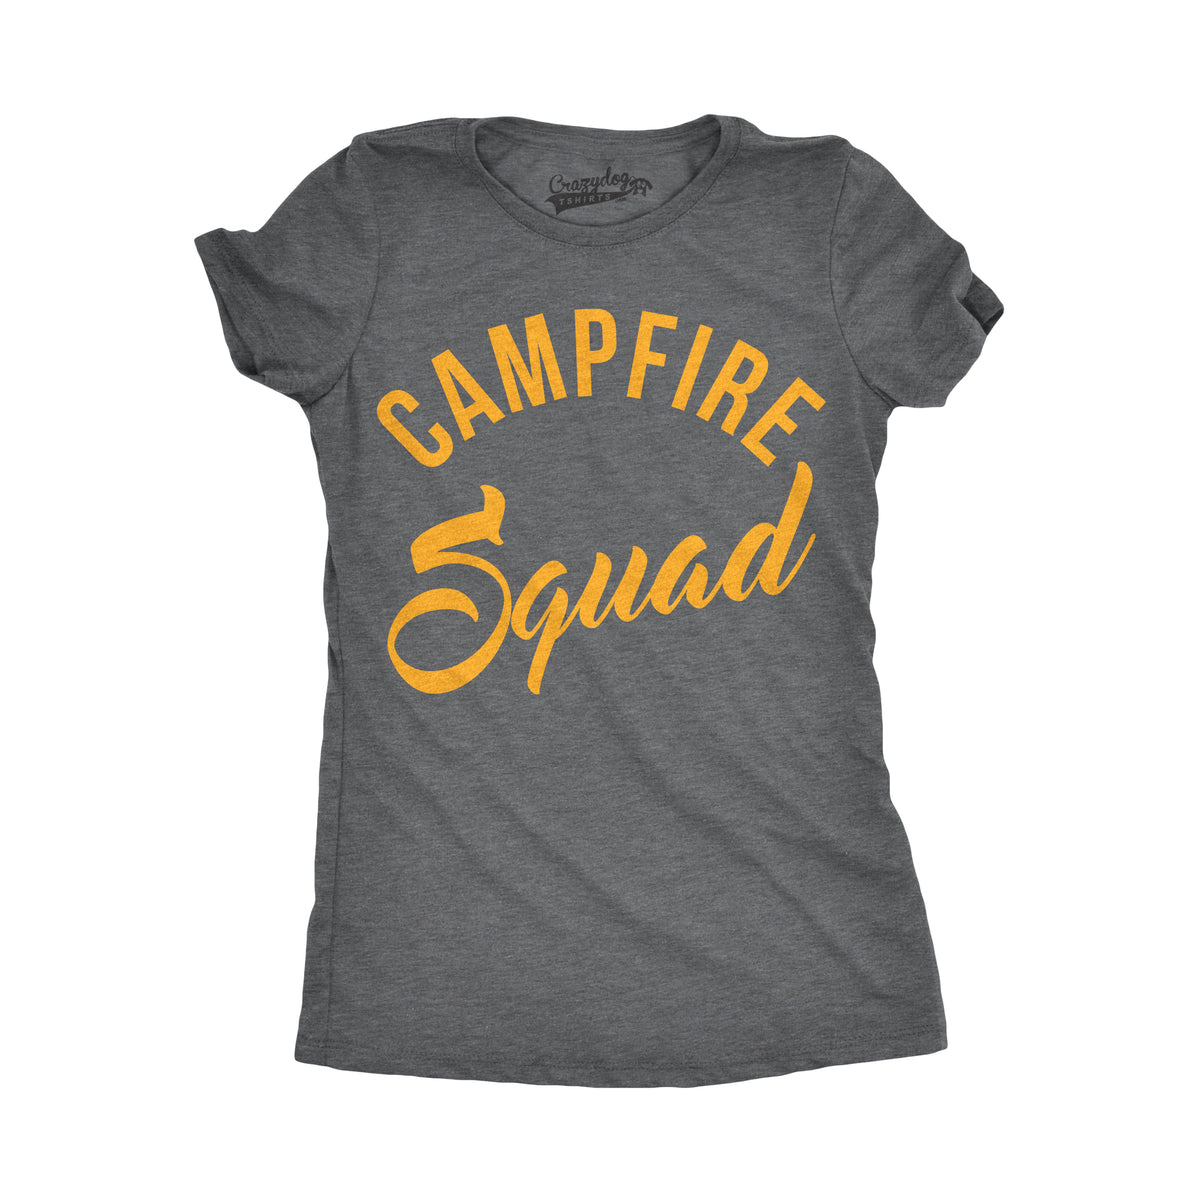 Funny Dark Heather Grey Womens T Shirt Nerdy Camping Retro Tee